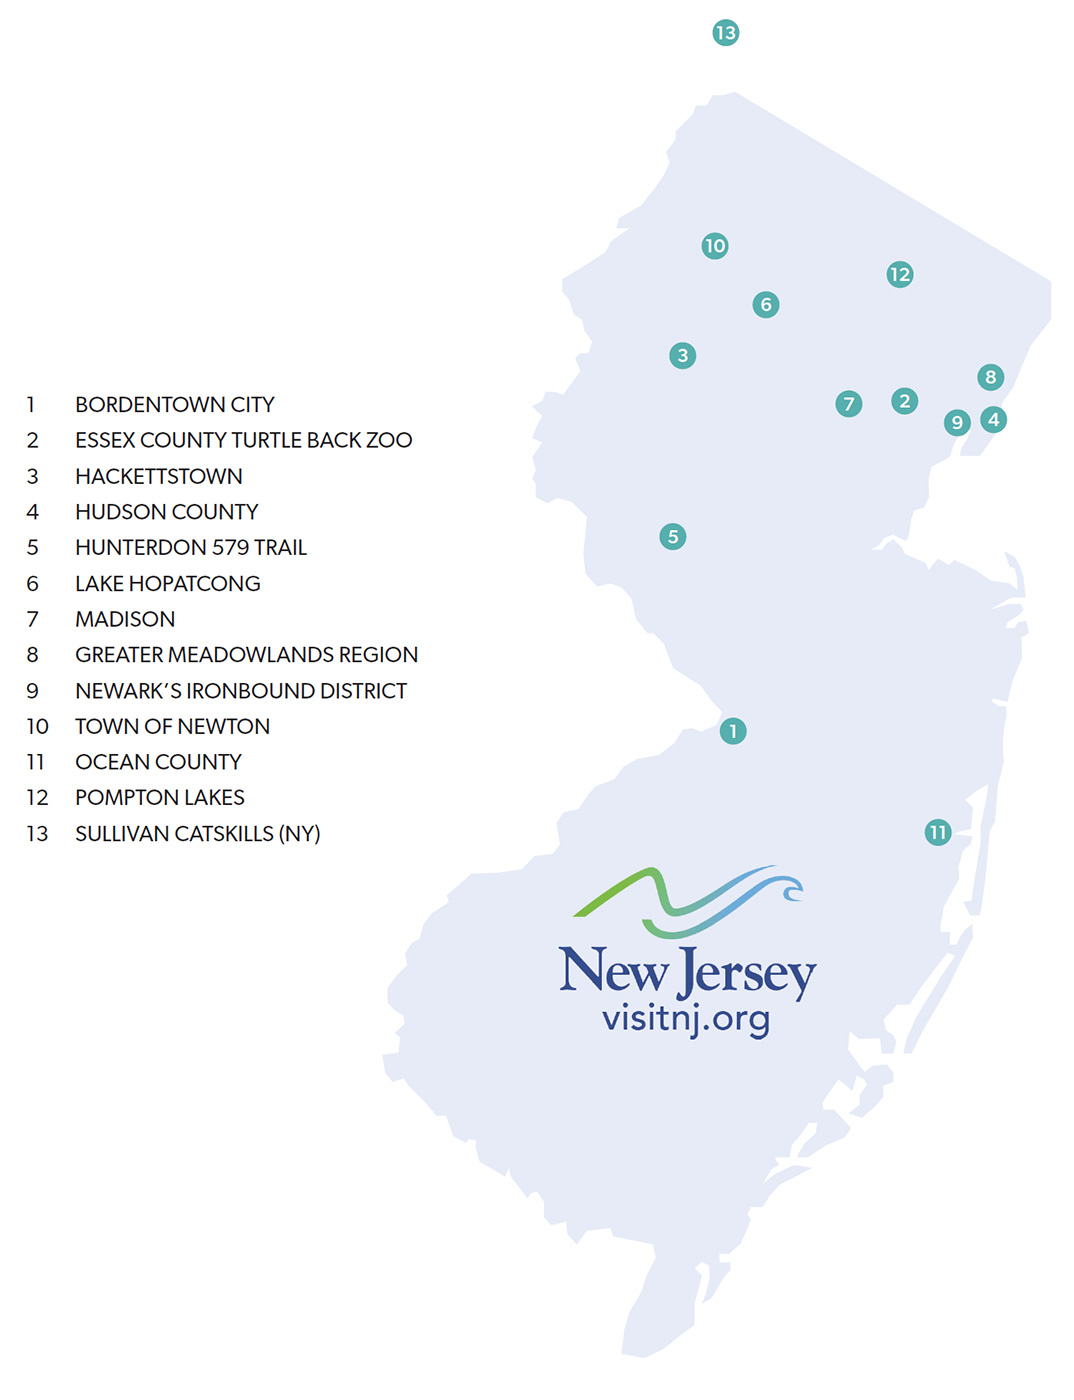 edible Jersey destination map